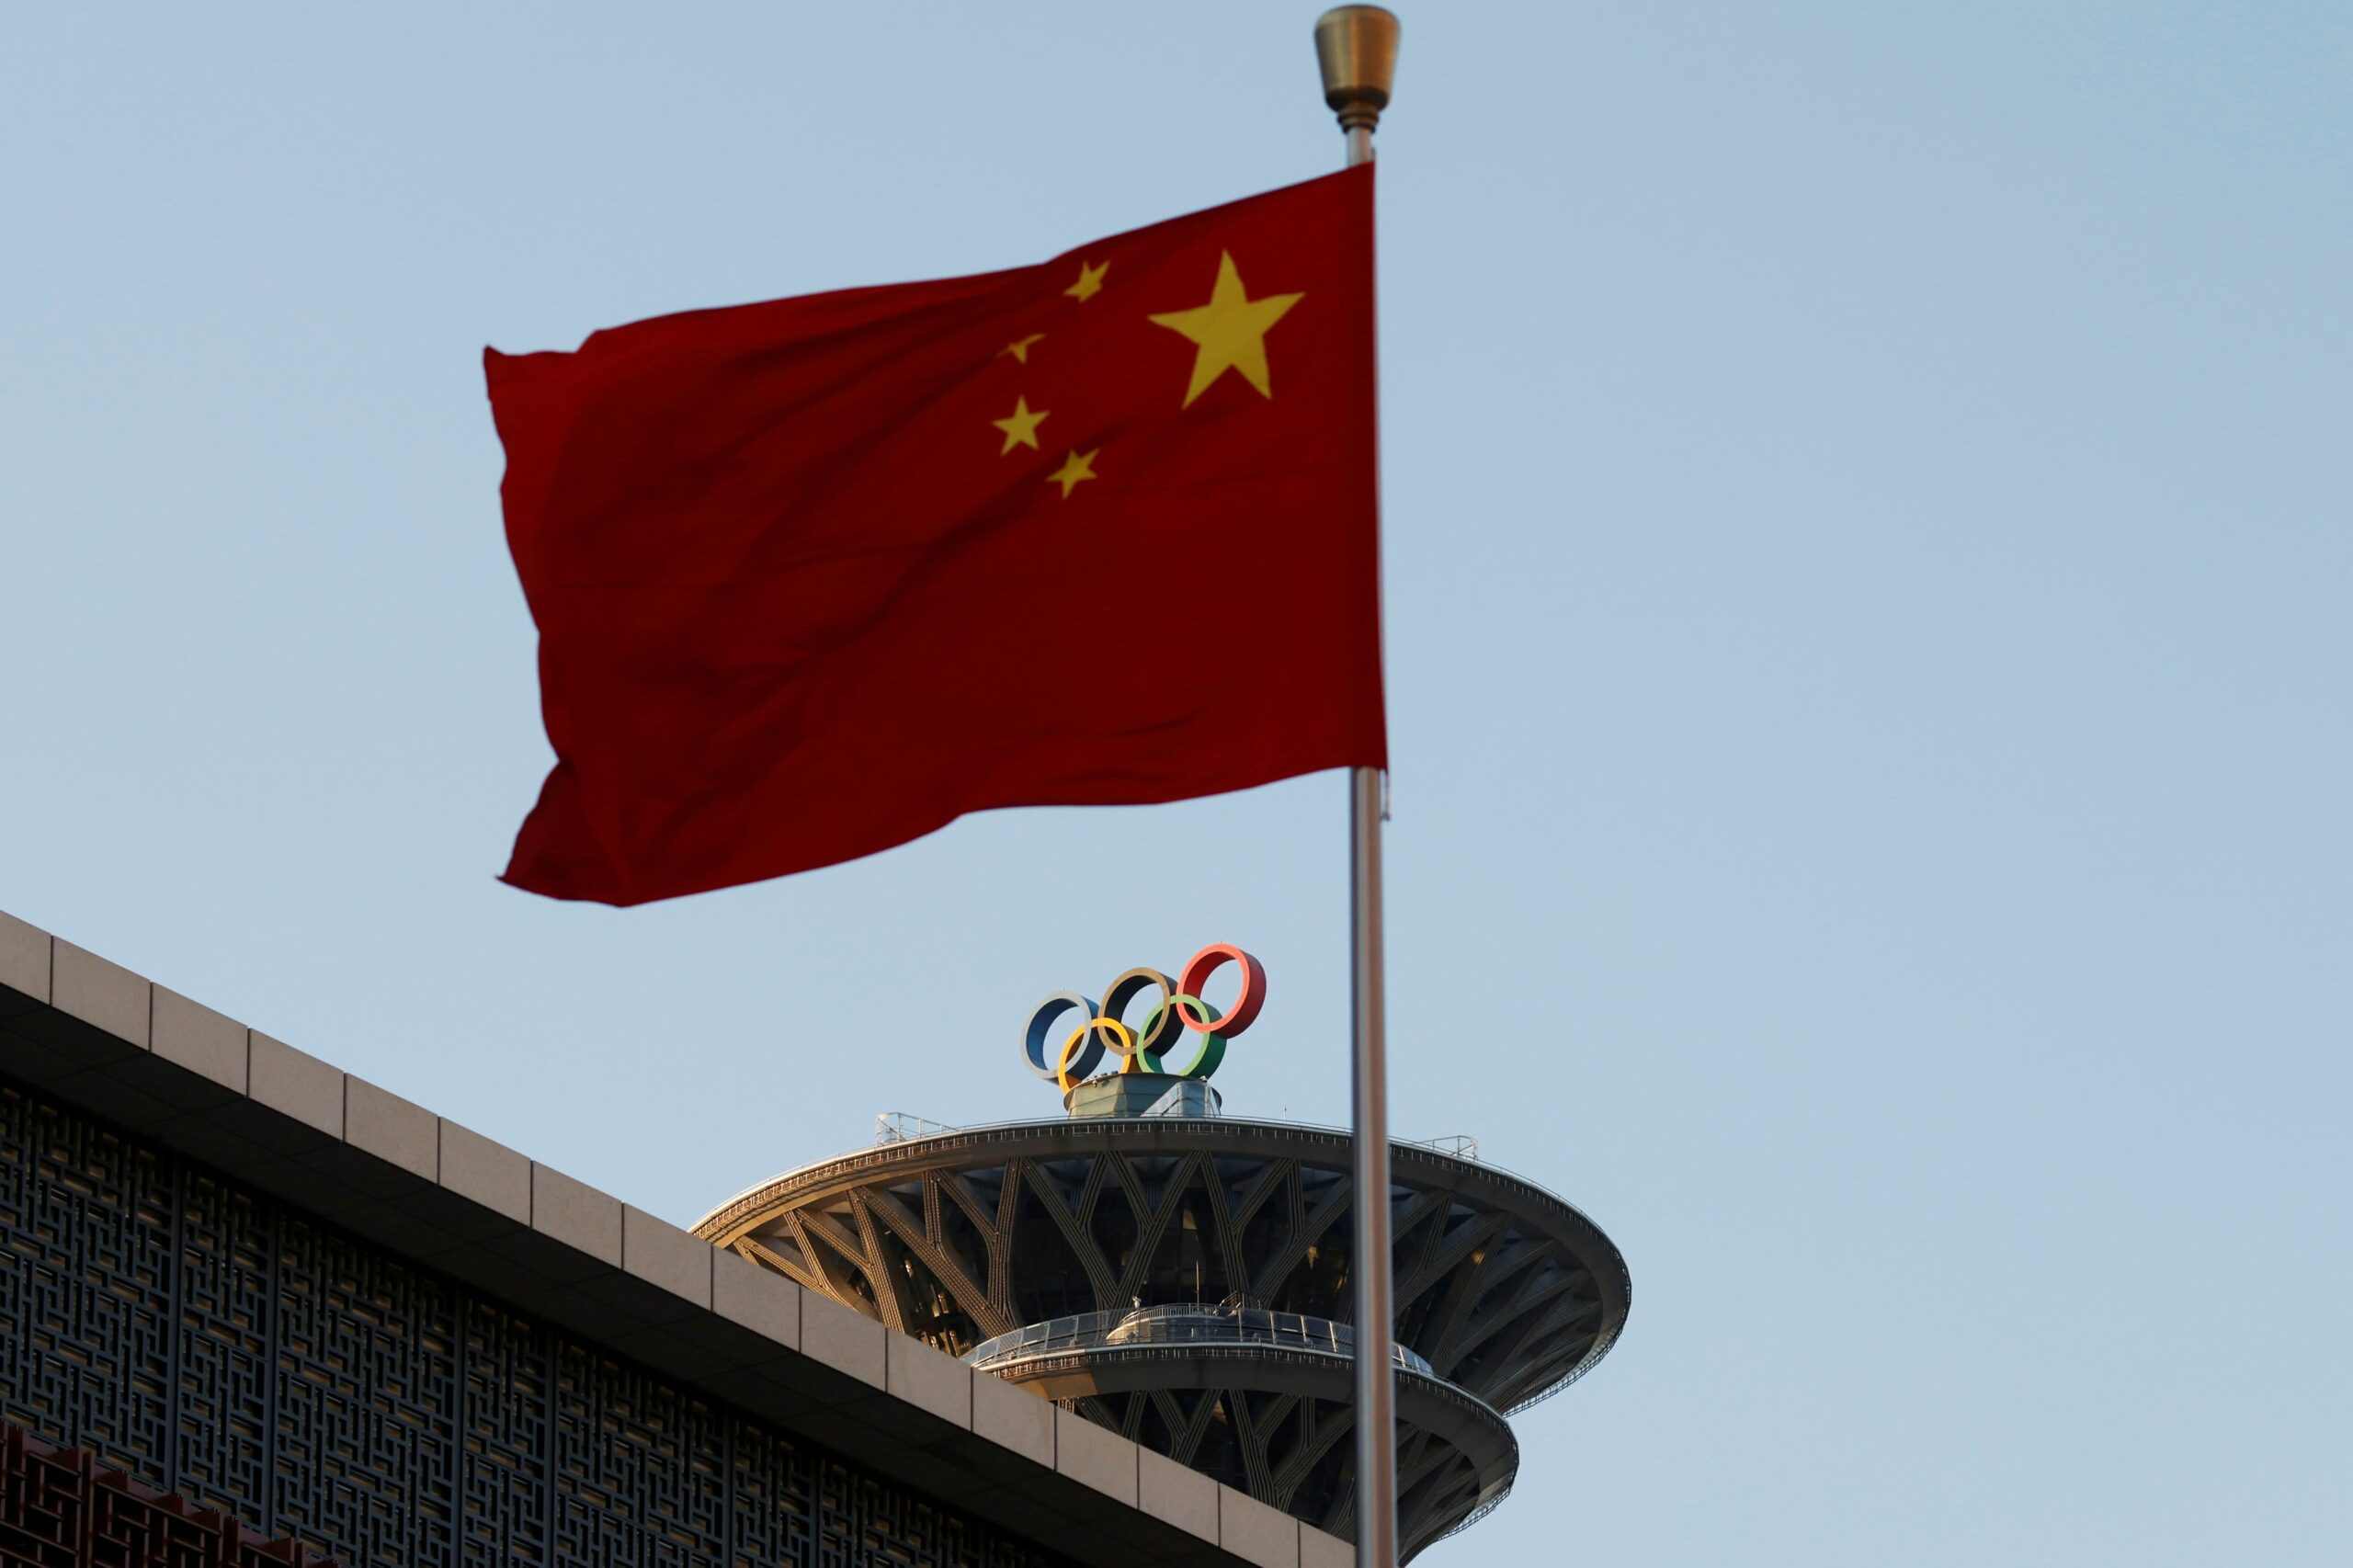 U.S. diplomats will boycott Beijing Winter Olympics over human rights abuses